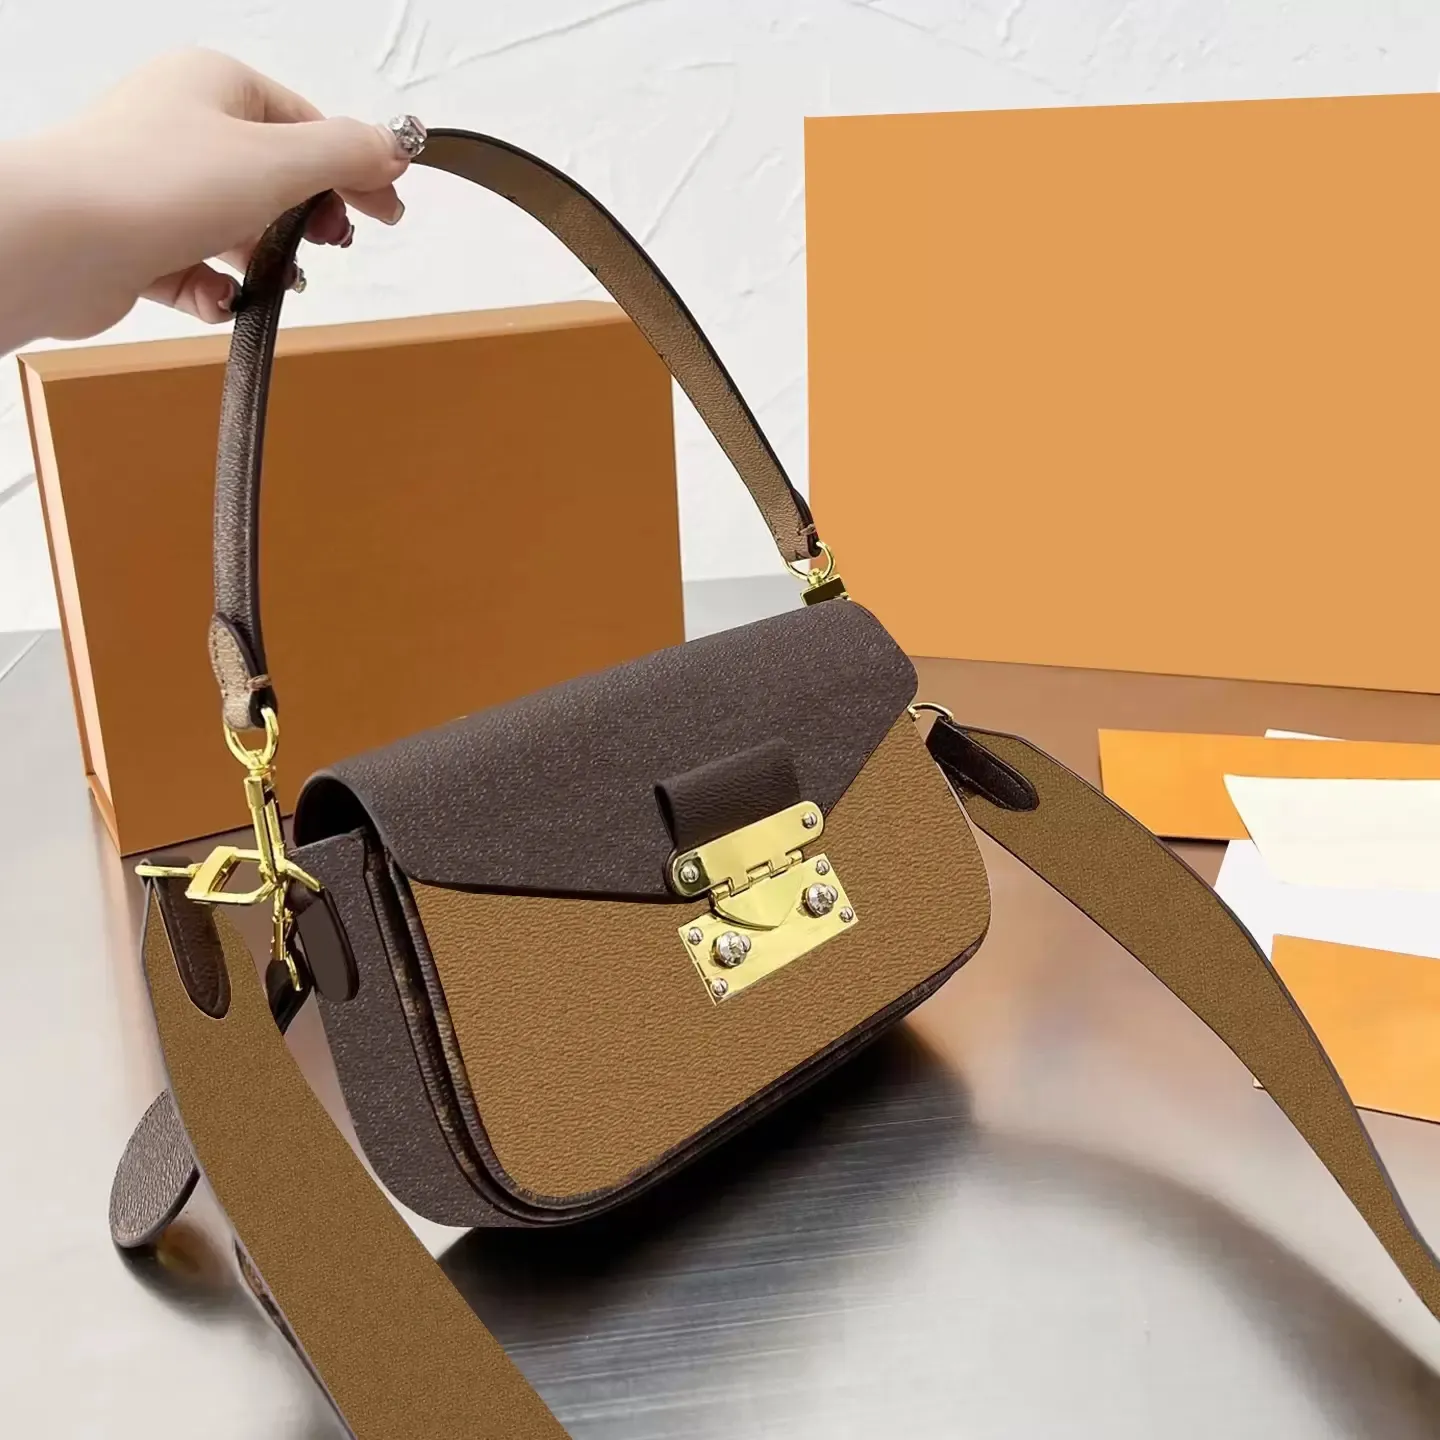 How to Give A New Look An Old Hand Bag| पुरानी हैंडबैग को नया लूक कैसे दे|  @ArtCraftsOficial - YouTube